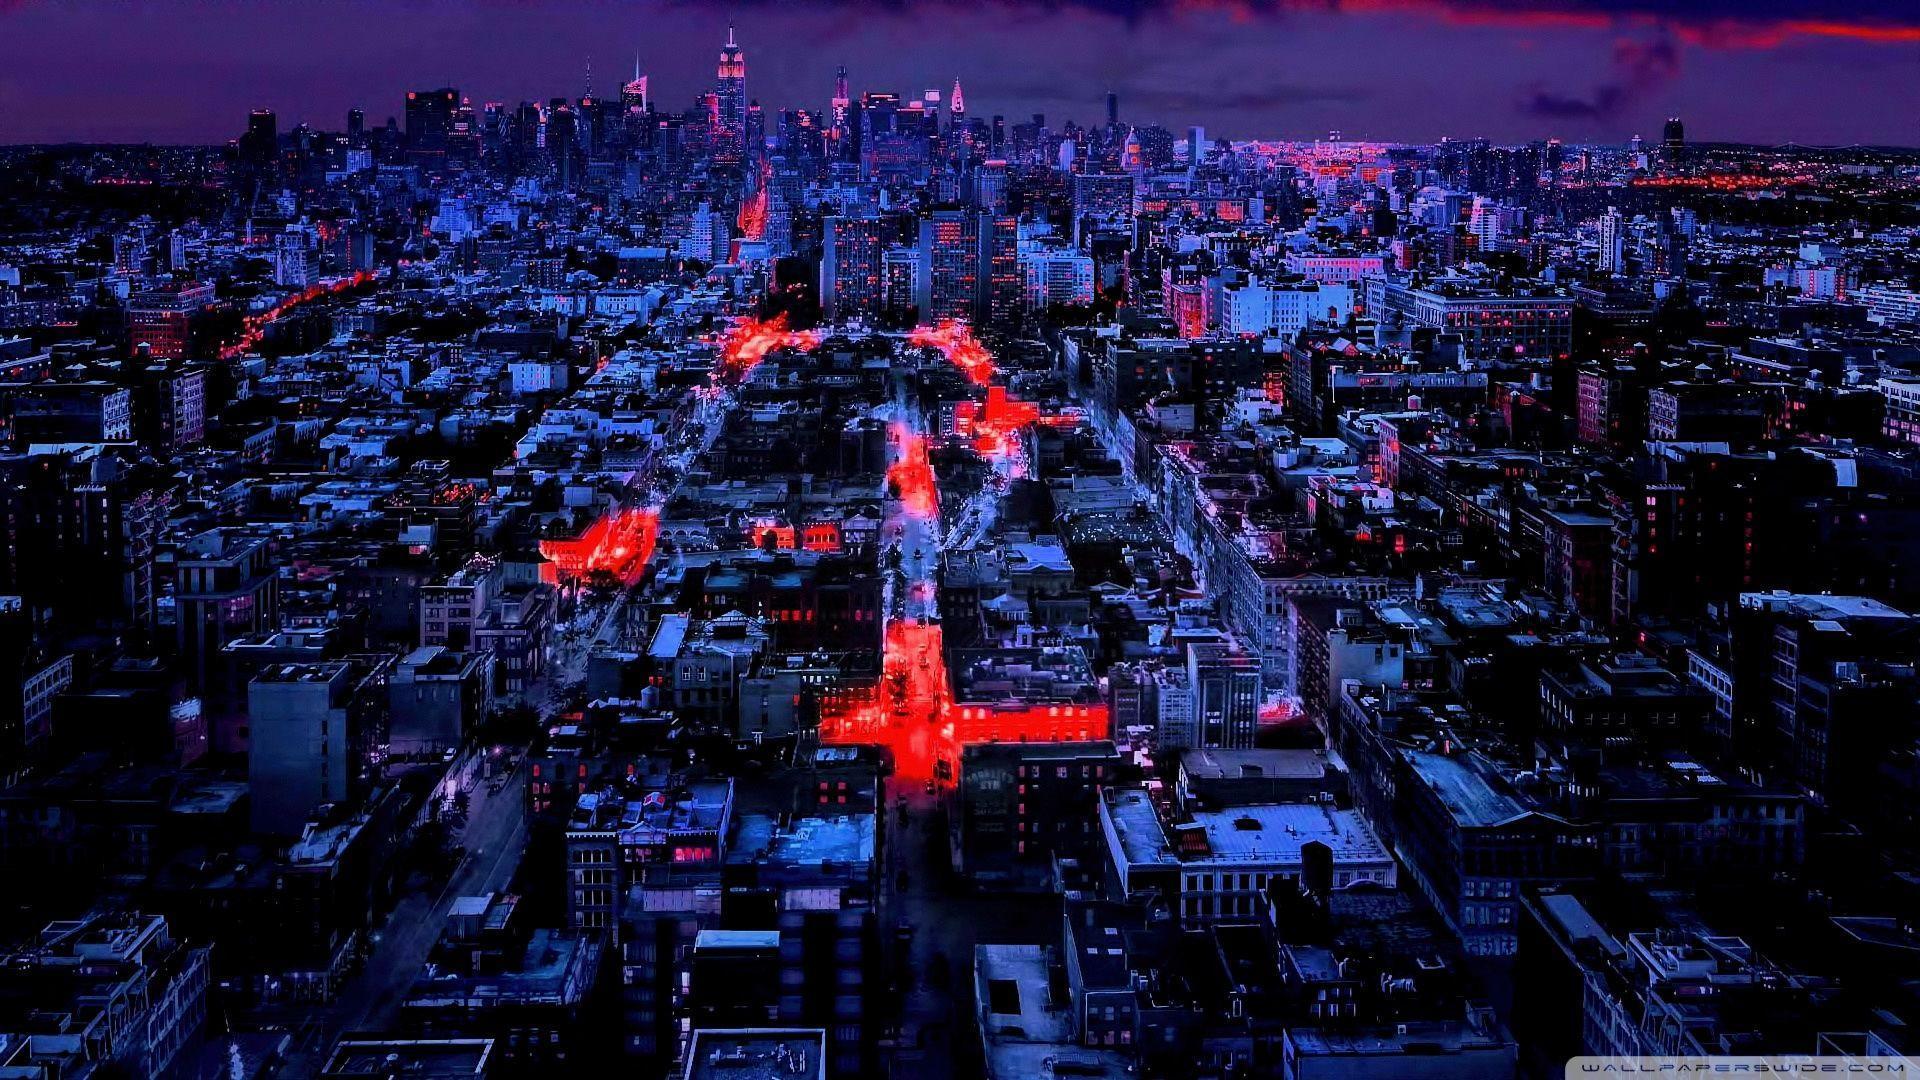 Daredevil Kitchen.01 Netflix HD desktop wallpaper, High